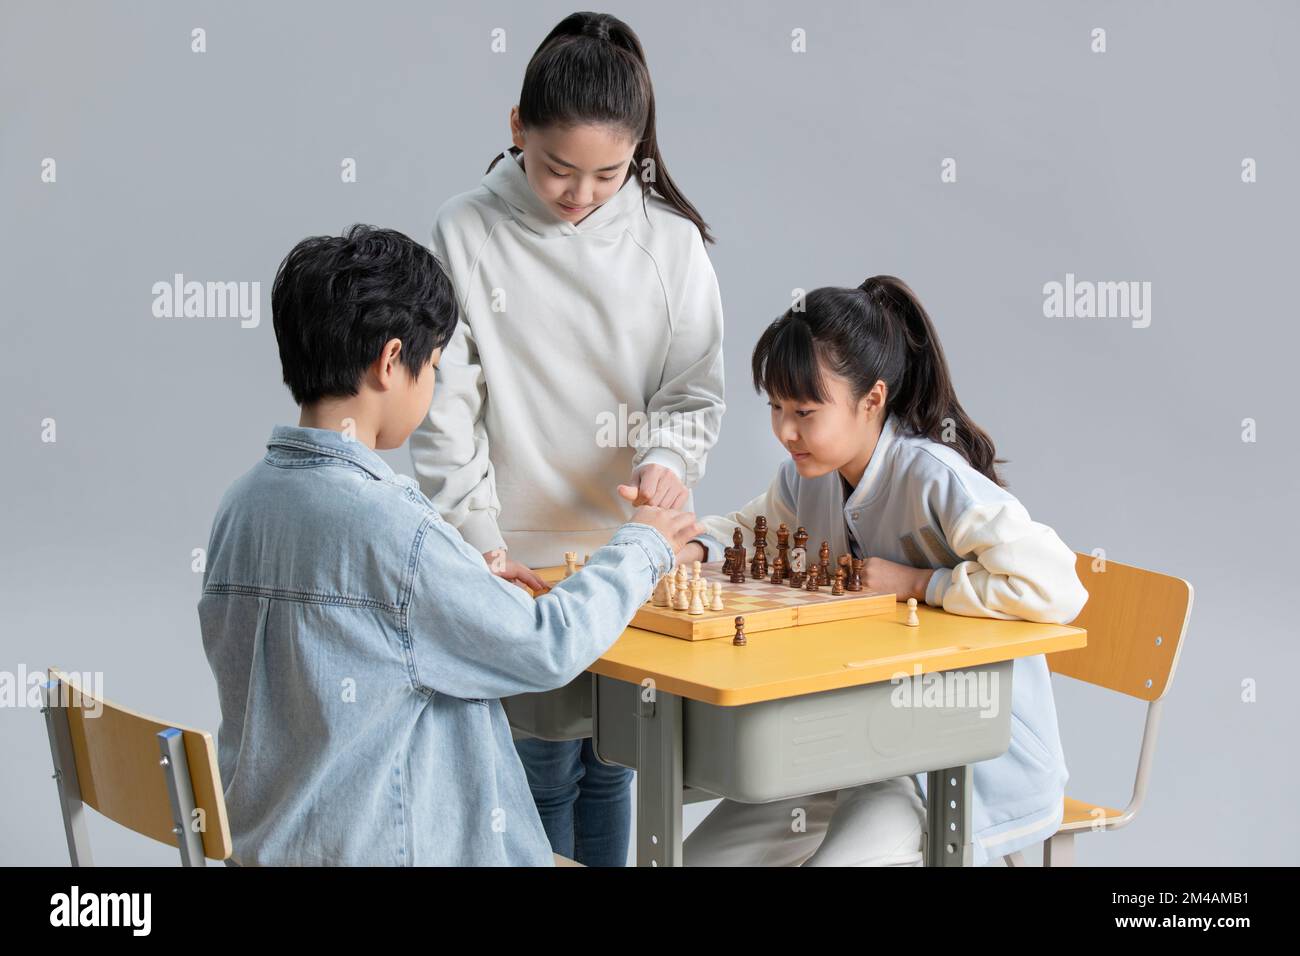 Cheerful Chinese friends playing chess Stock Photo